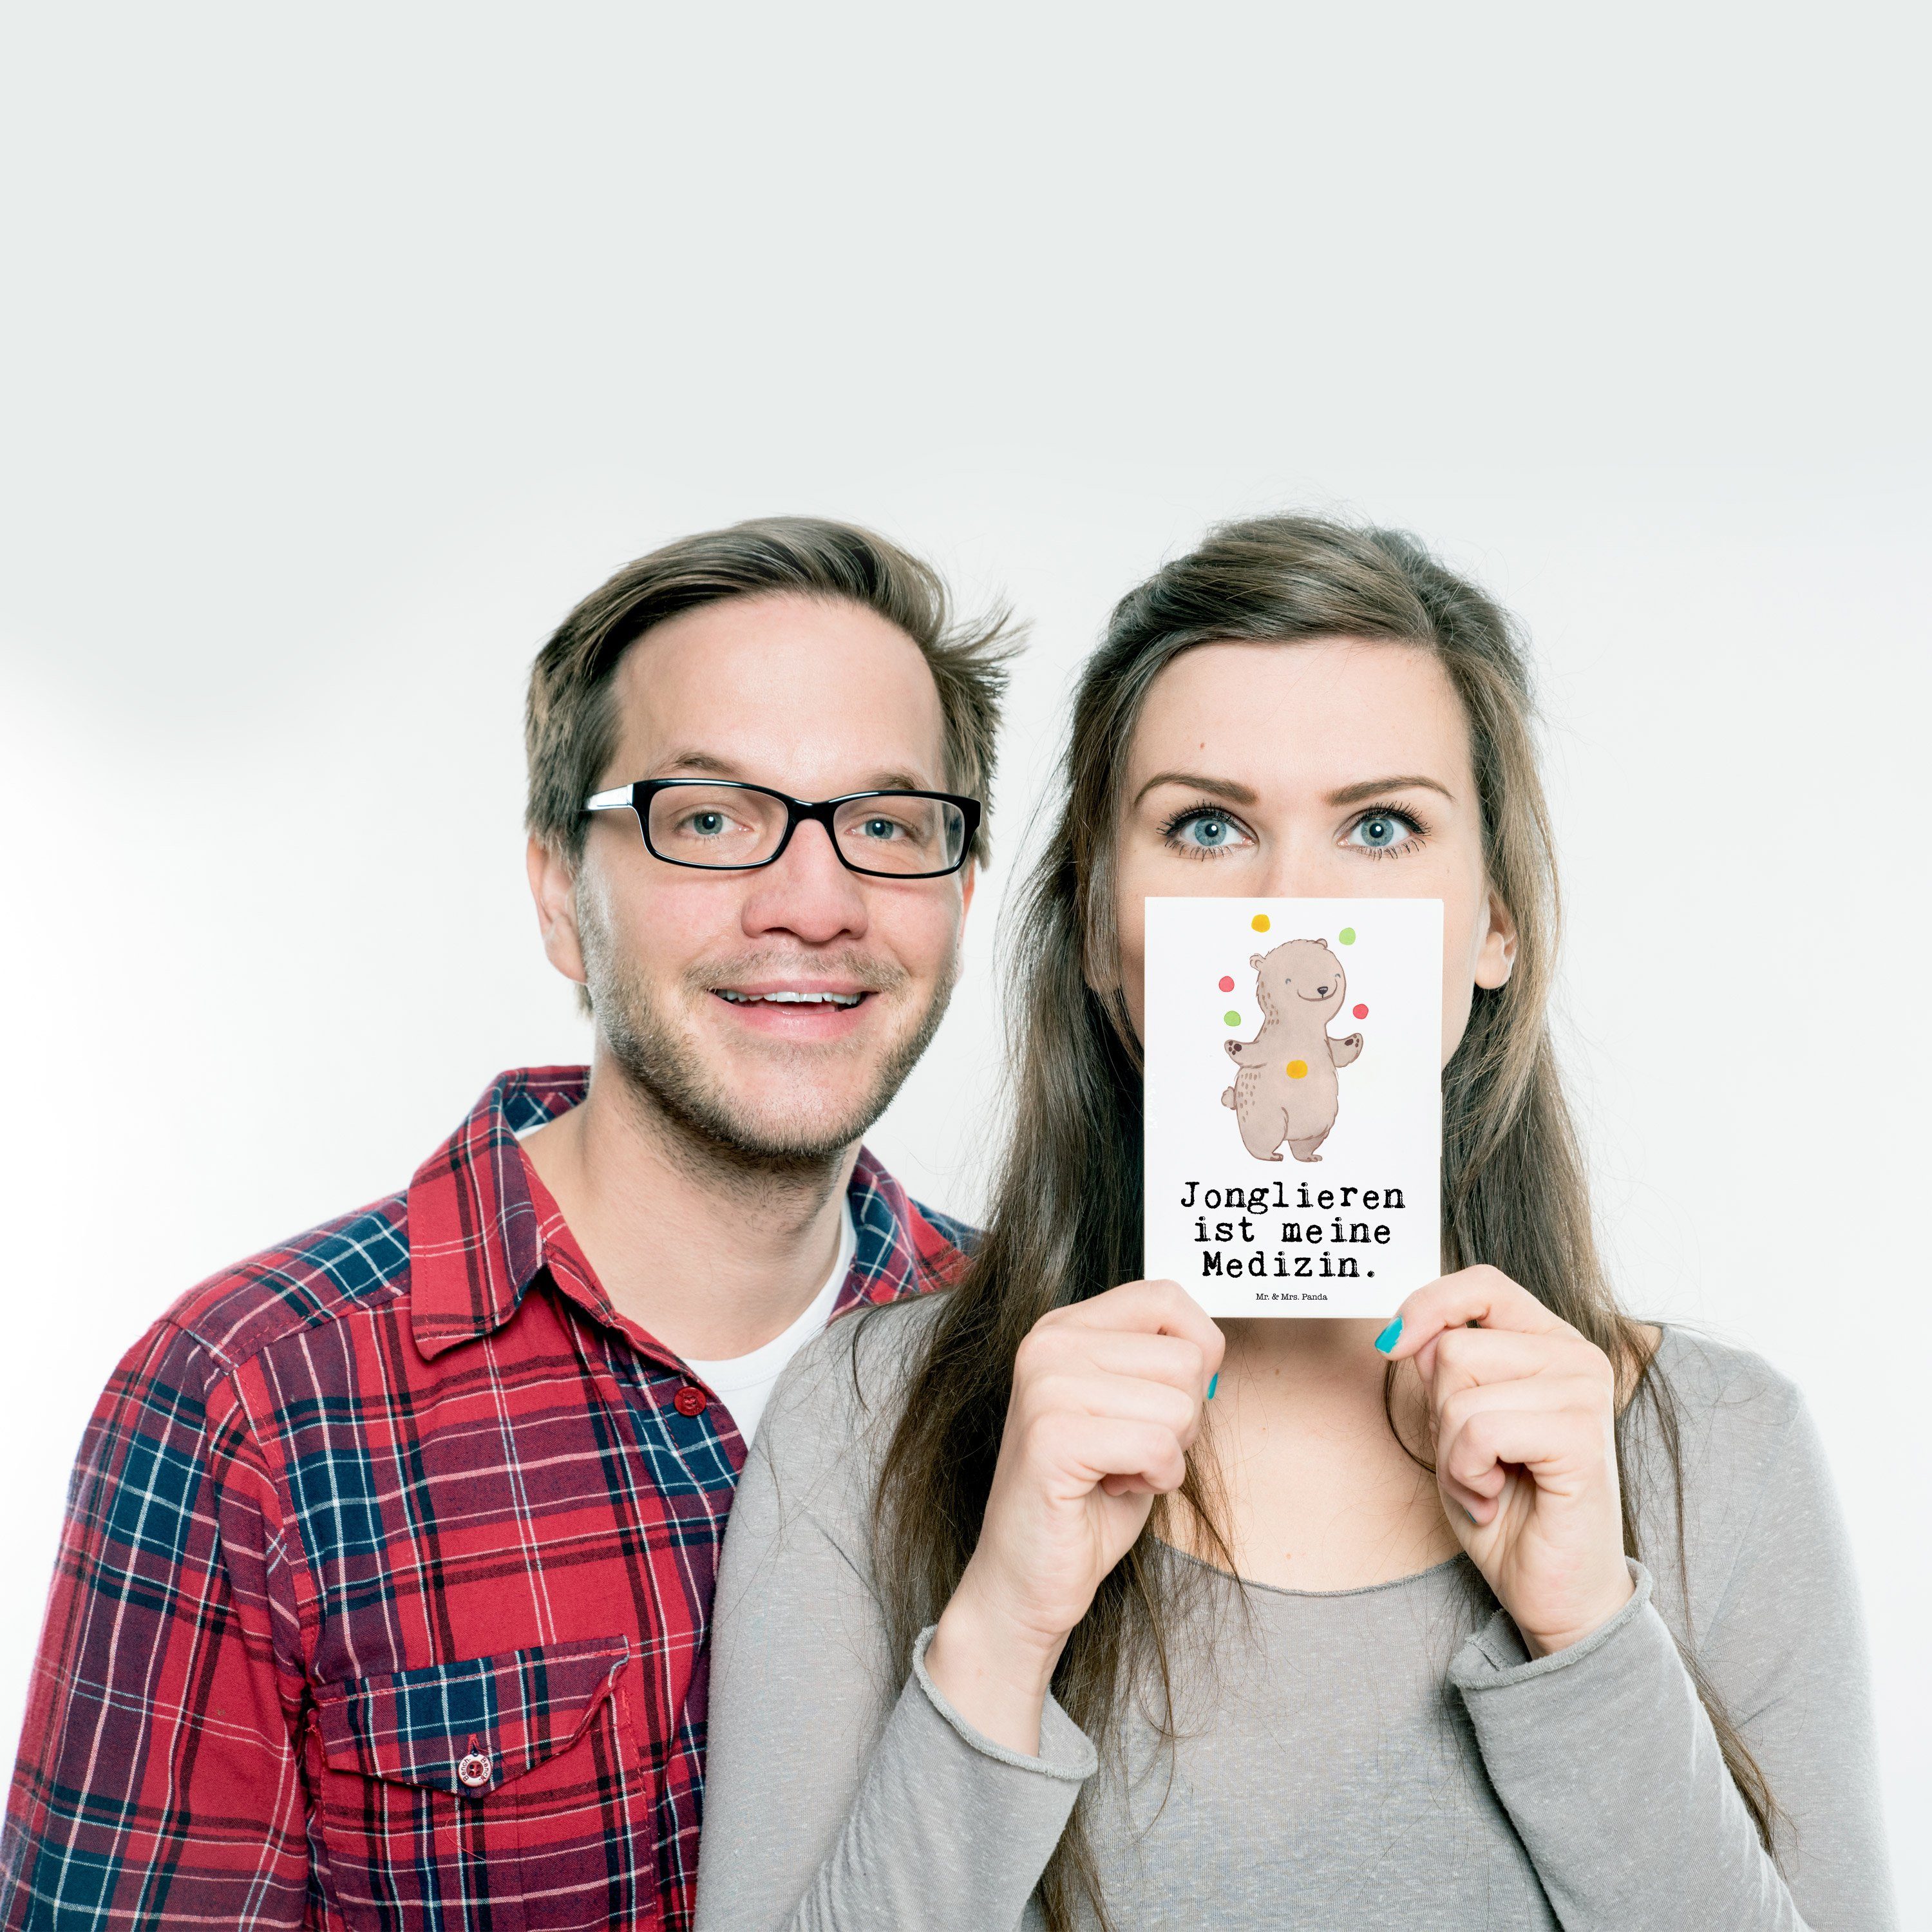 Mr. & Mrs. Panda Postkarte Geschenk, Weiß - - Medizin Jonglieren Einlad Bär Grußkarte, Artistik